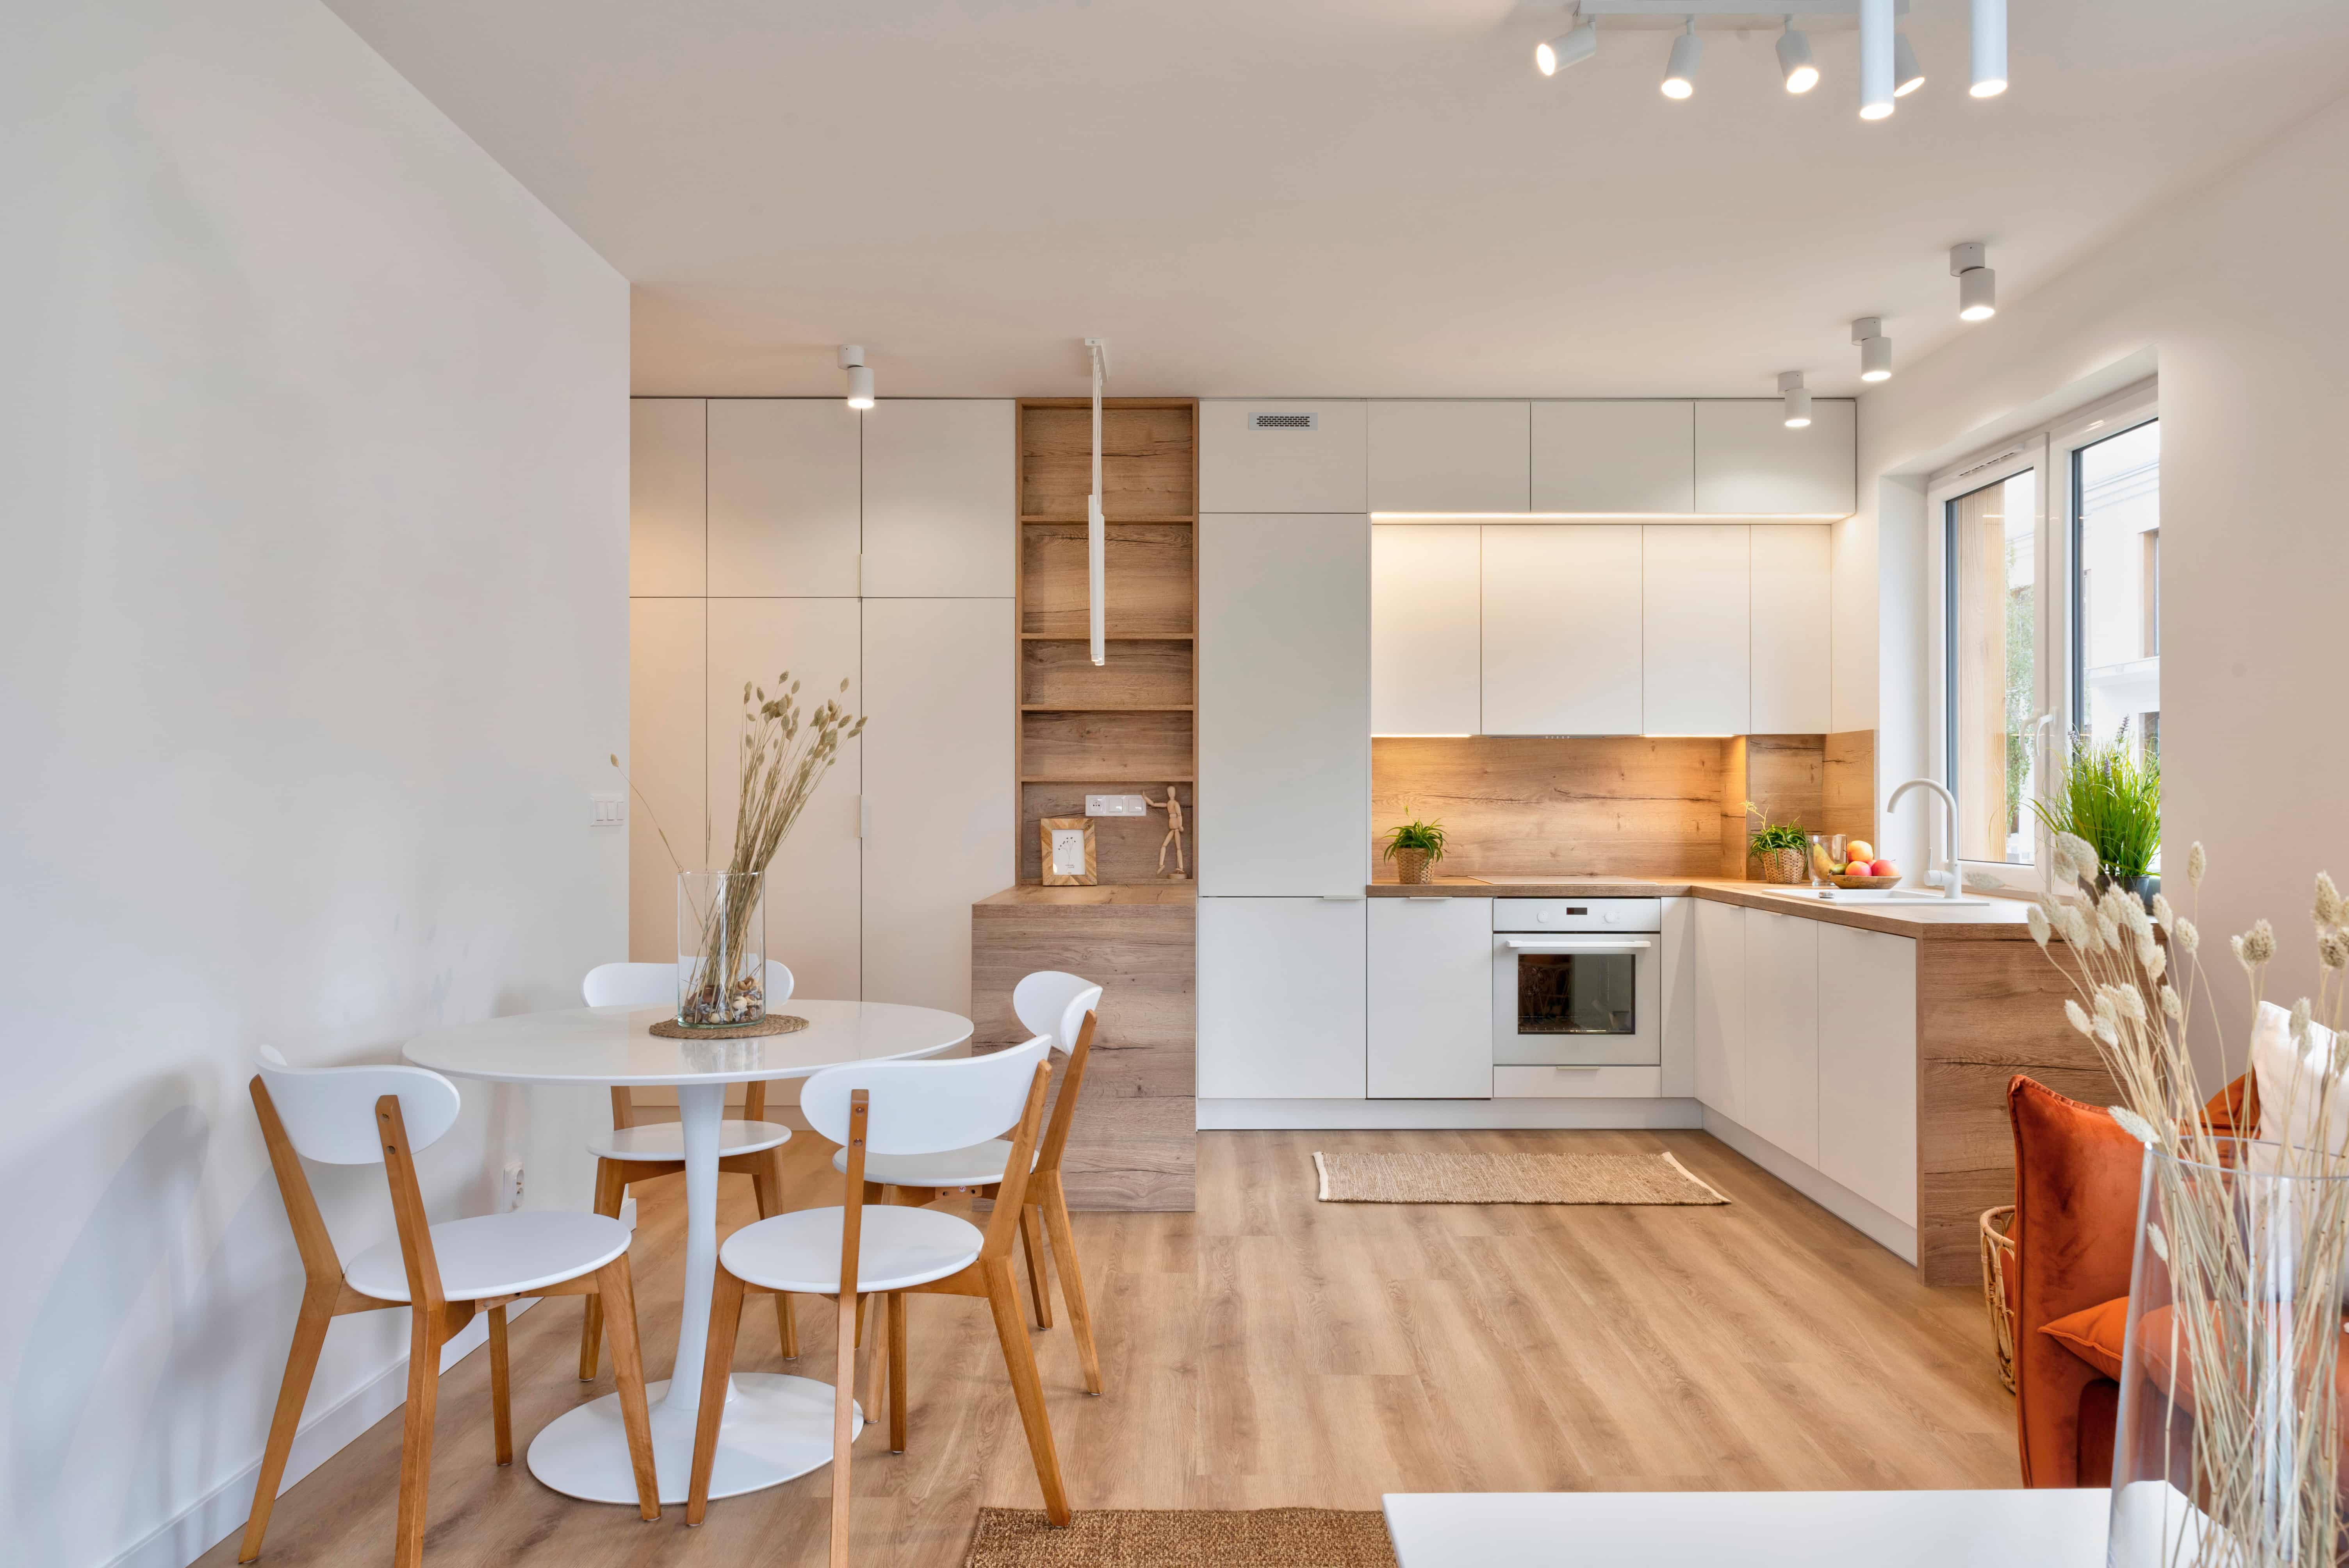 Kitchen designed by a multi-family architect